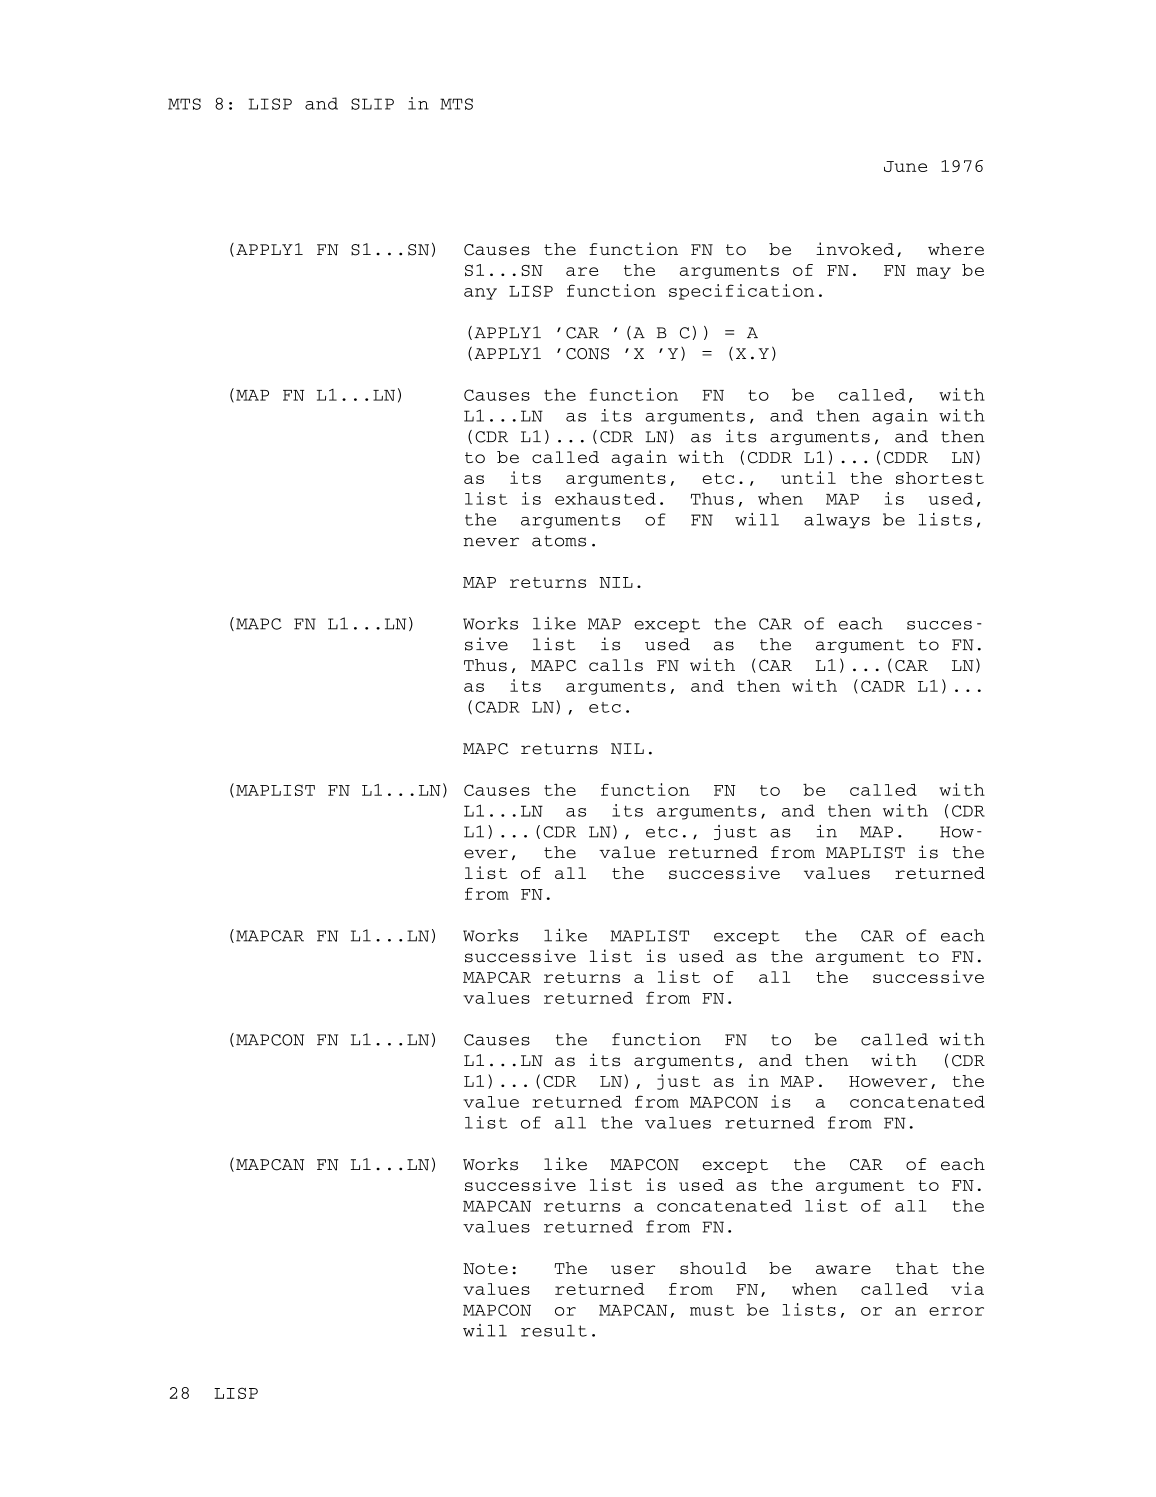 MTS Volume 8 - LISP and SLIP page 28